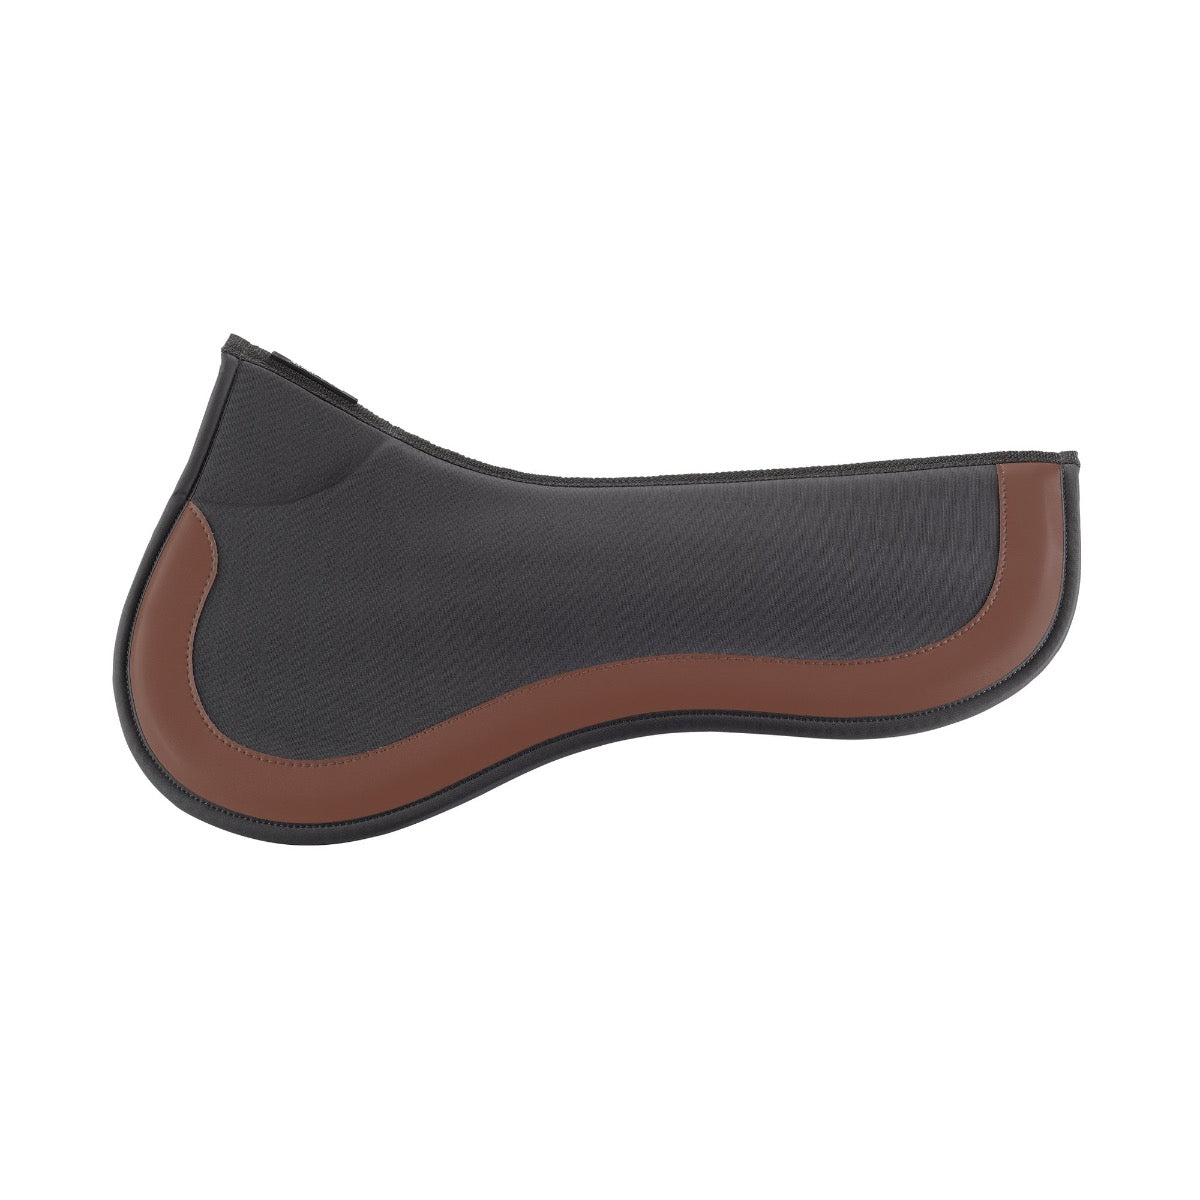 product shot image of the equifit custom impacteq half pad brown